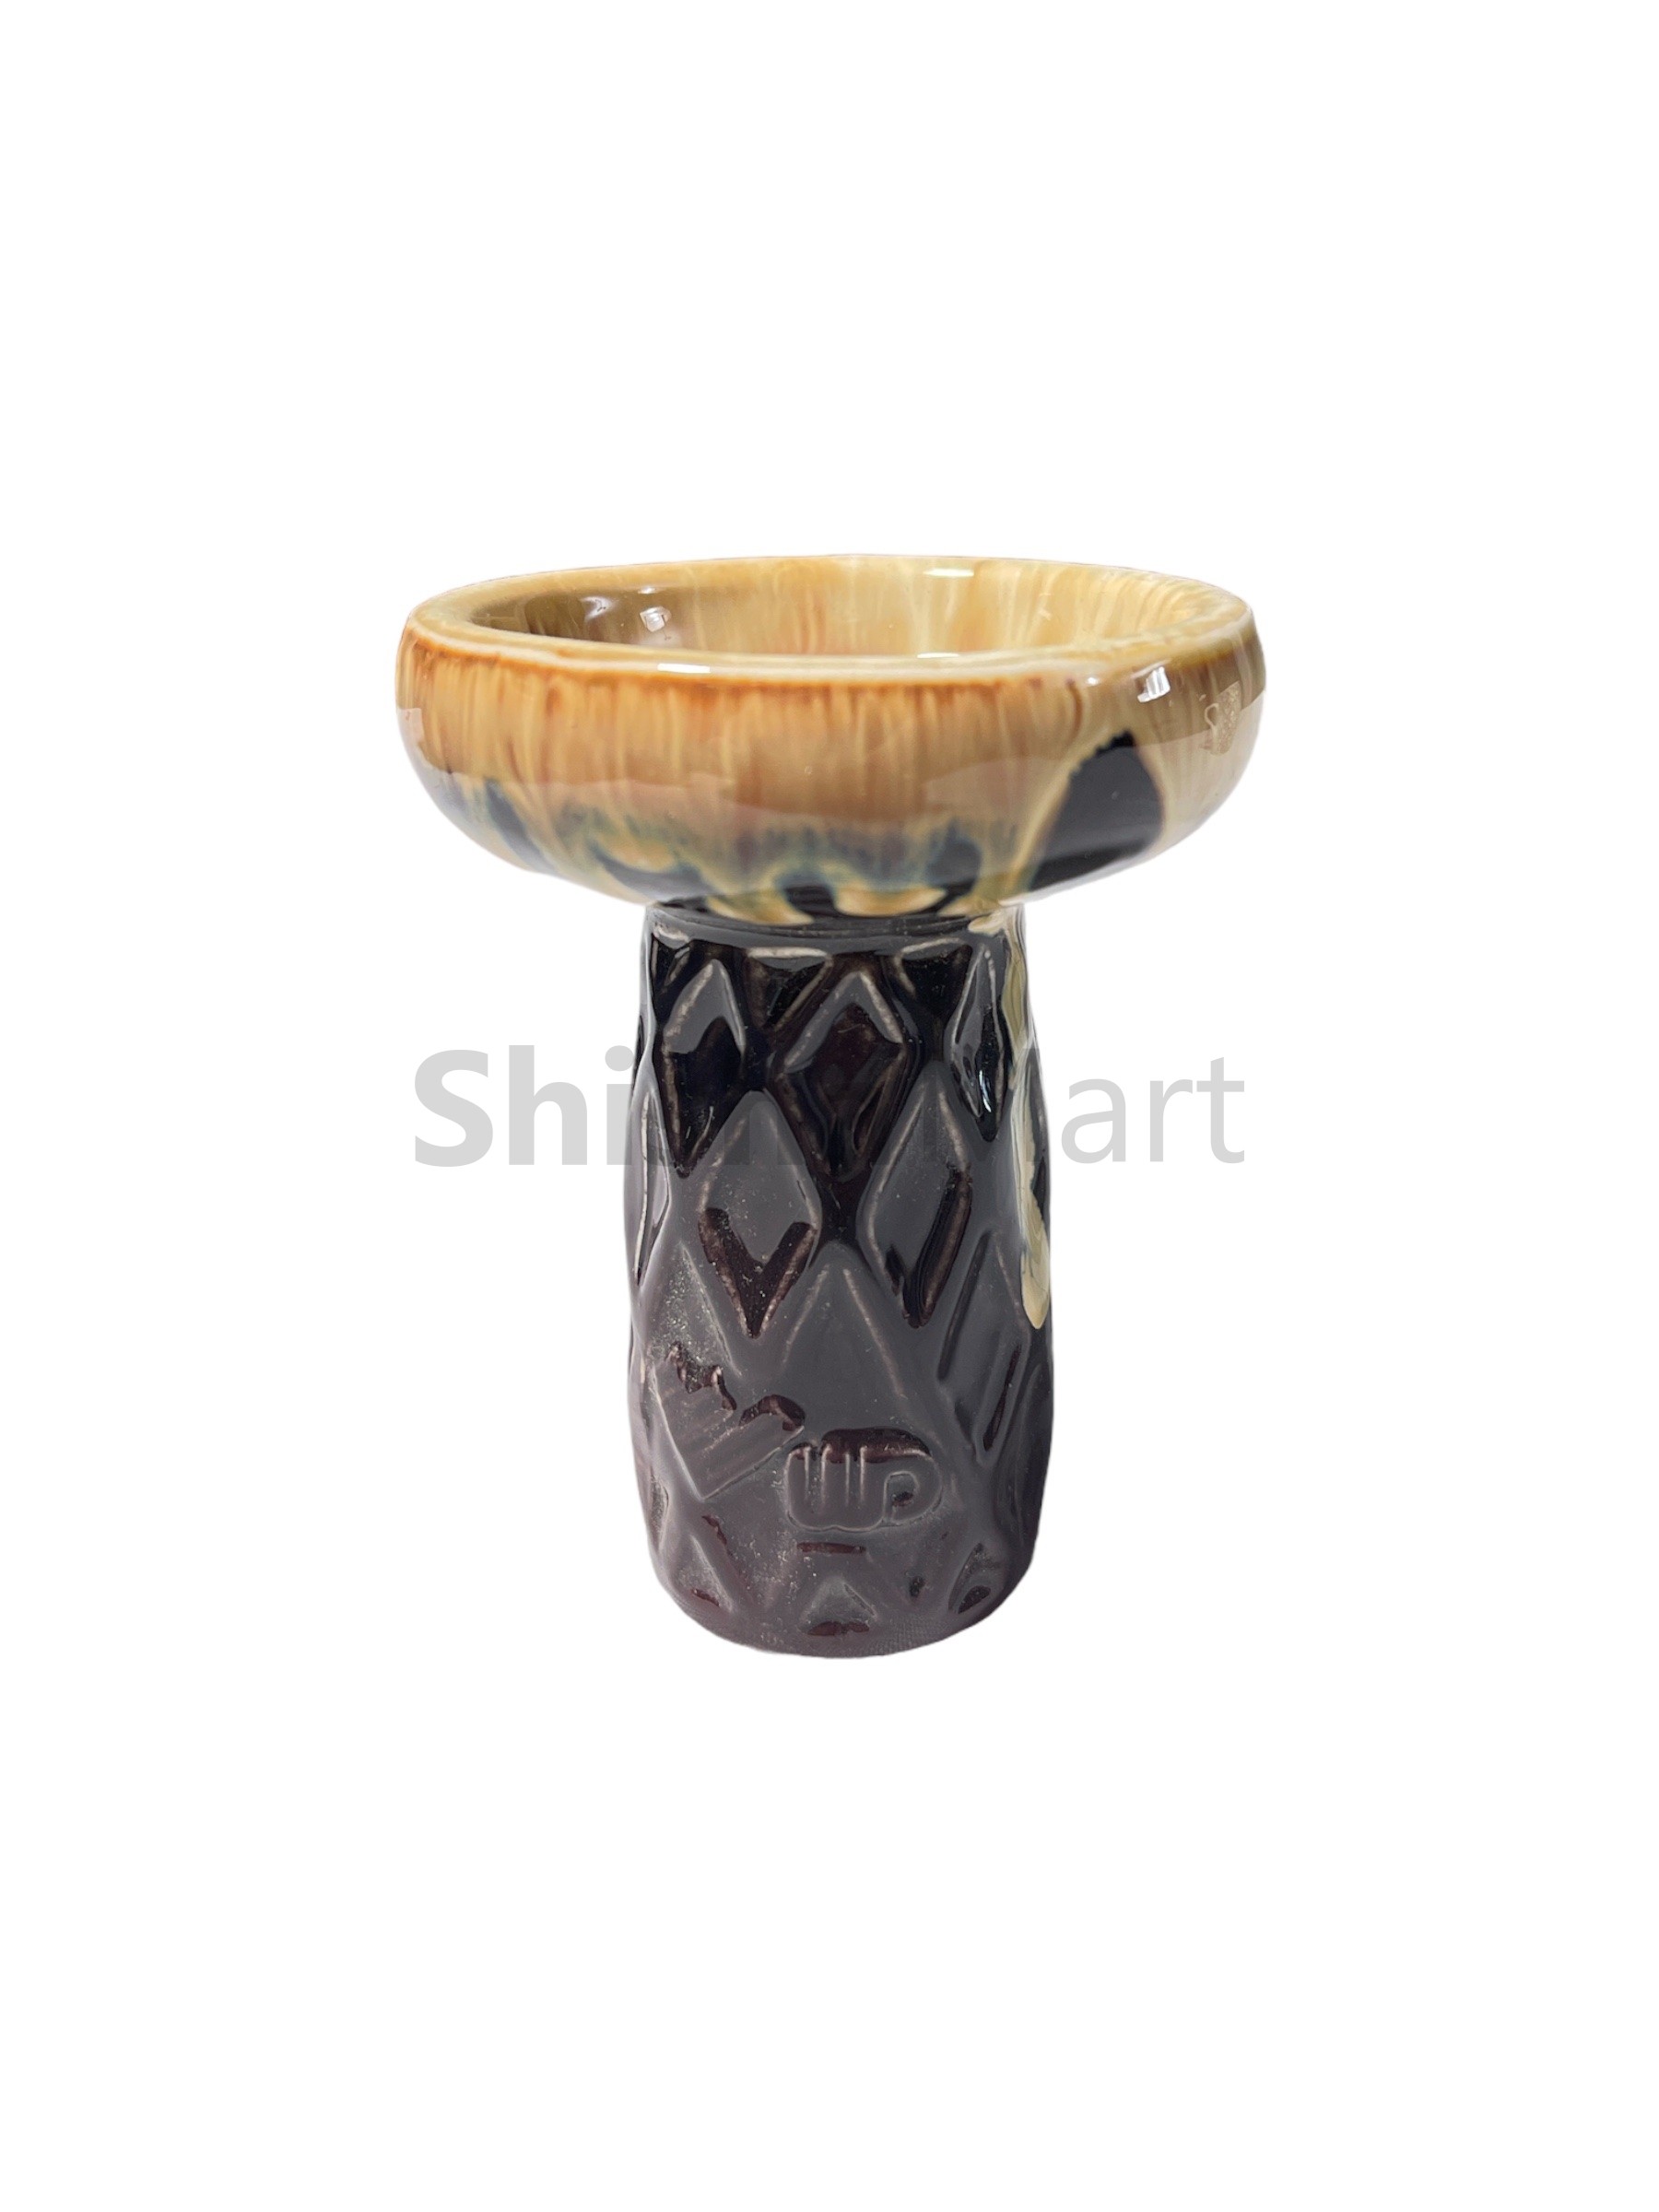 Hookah Shisha Ceramic Hookah Head Shisha Tobacco Bowl For Water Pipe  /Hookah / Sheesha / Chicha / Narguile Accessories